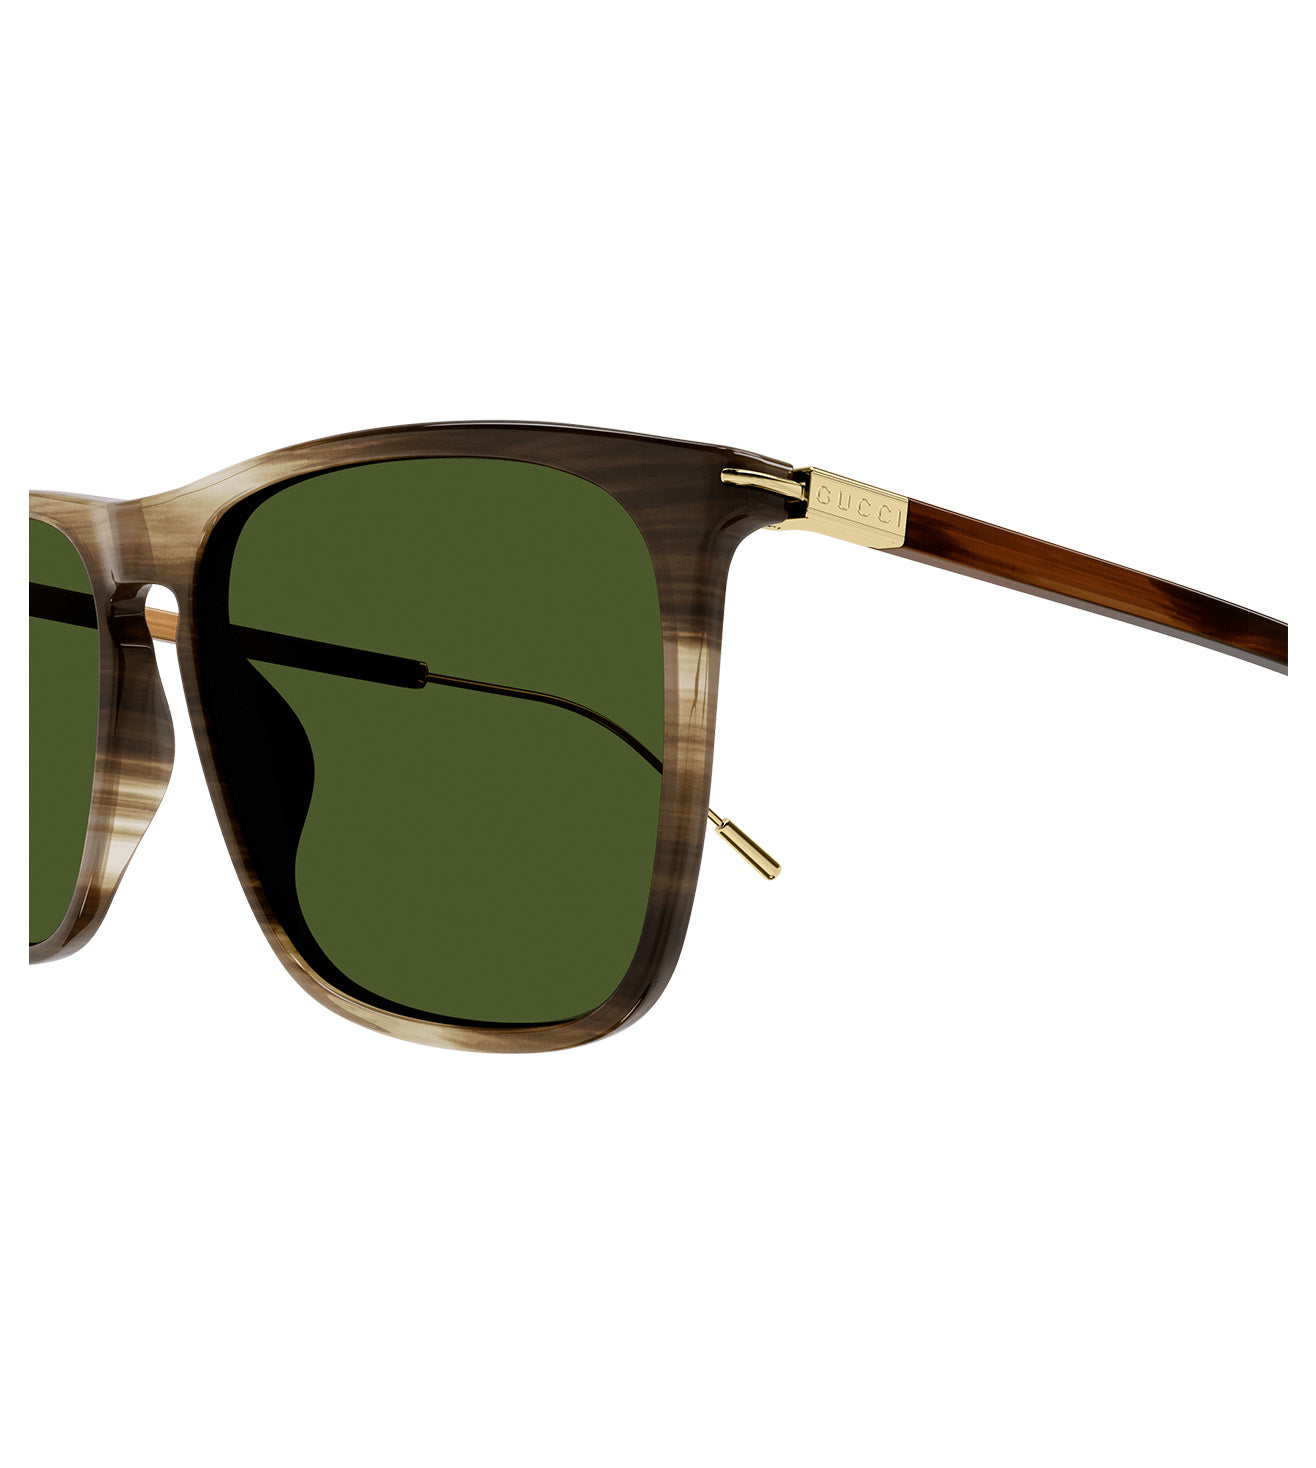 Gucci Men's Green Wayfarer Sunglasses